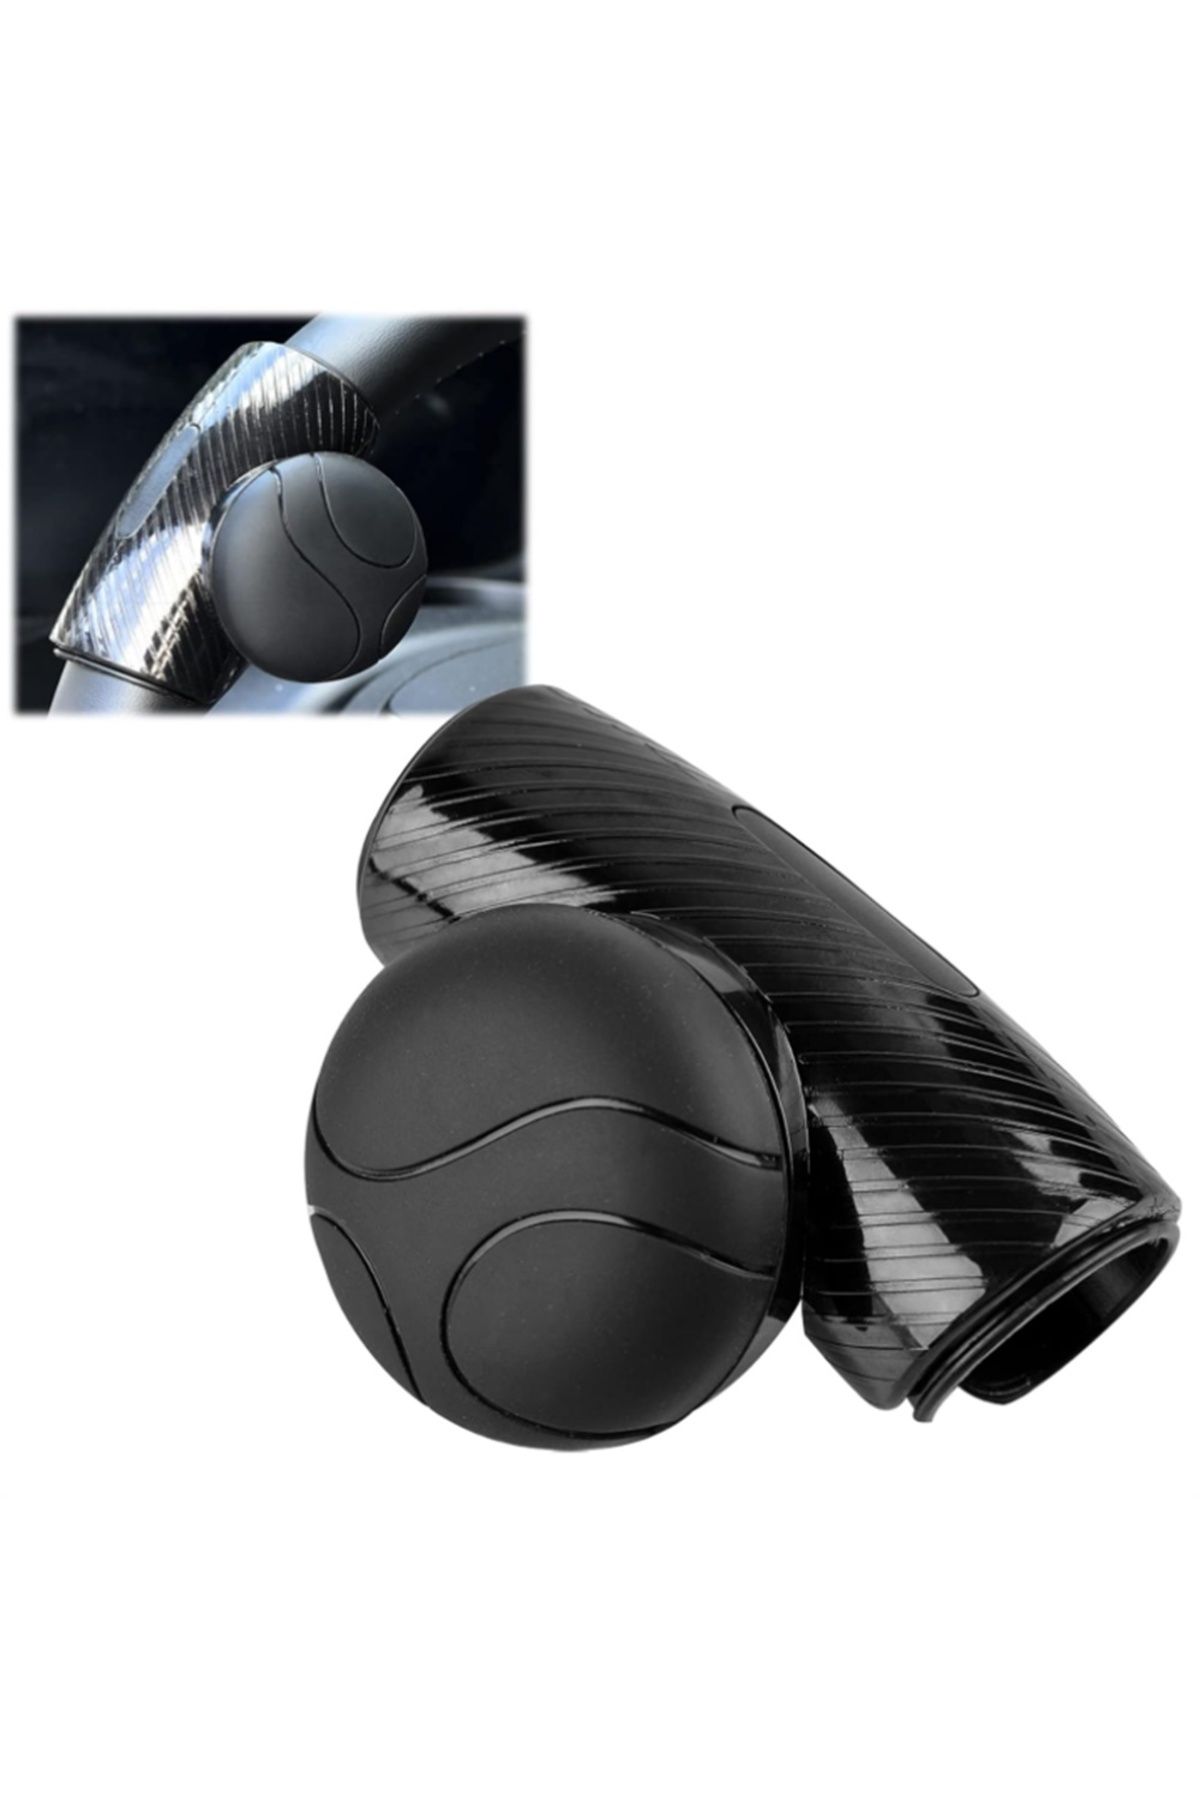 caraks Direksiyon Topuzu Geçme Model Siyah Renk 360 Derece Araç Direksiyon Topuzu - Caraks